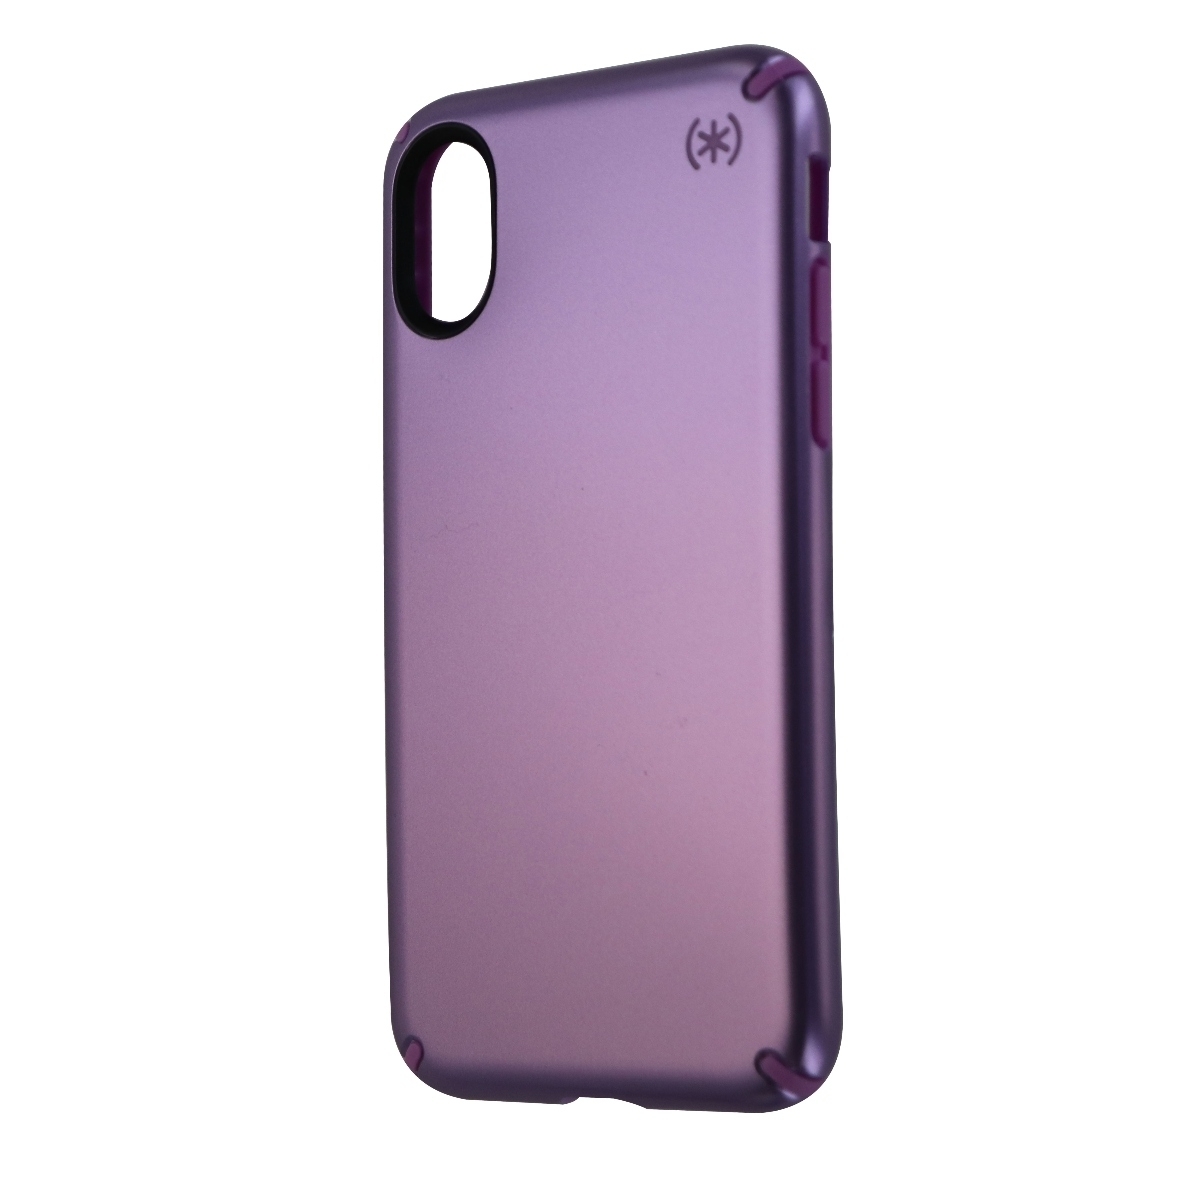 Speck Presidio Hybrid Case For Apple IPhone Xs And IPhone X - Metallic Purple